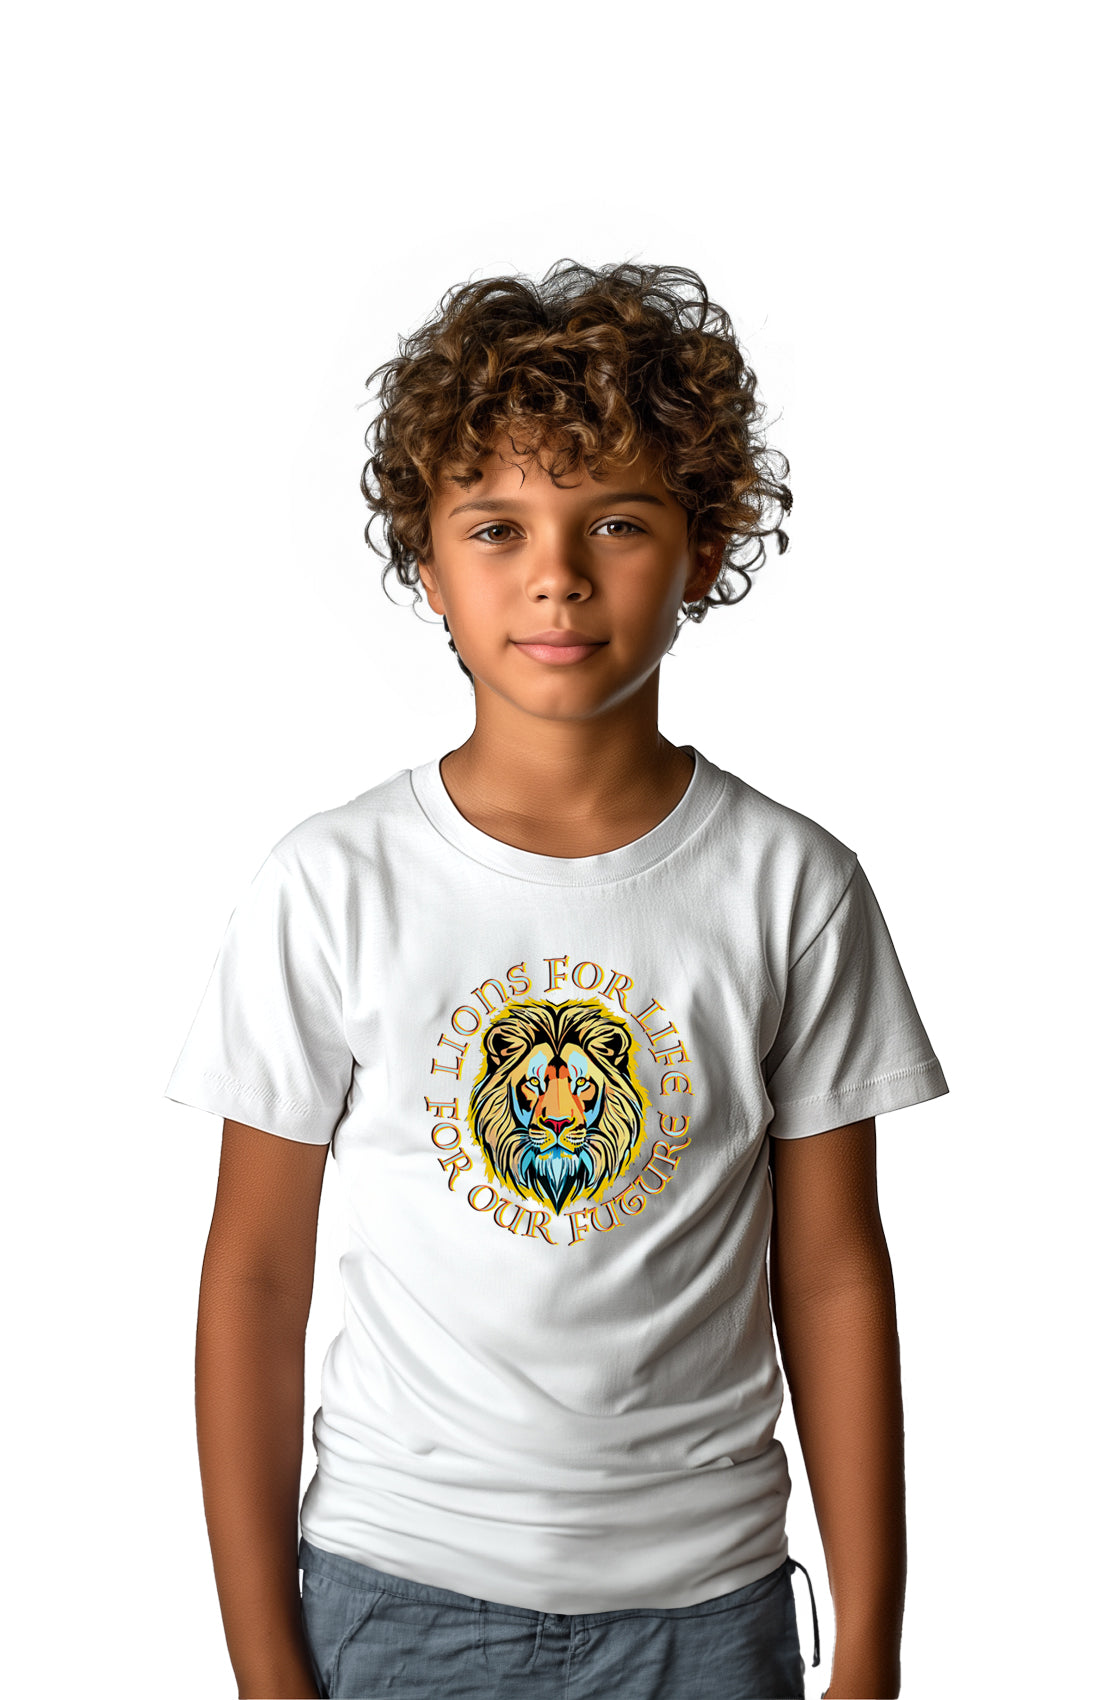 Daniel James London Unisex For Lions For Life T-Shirt